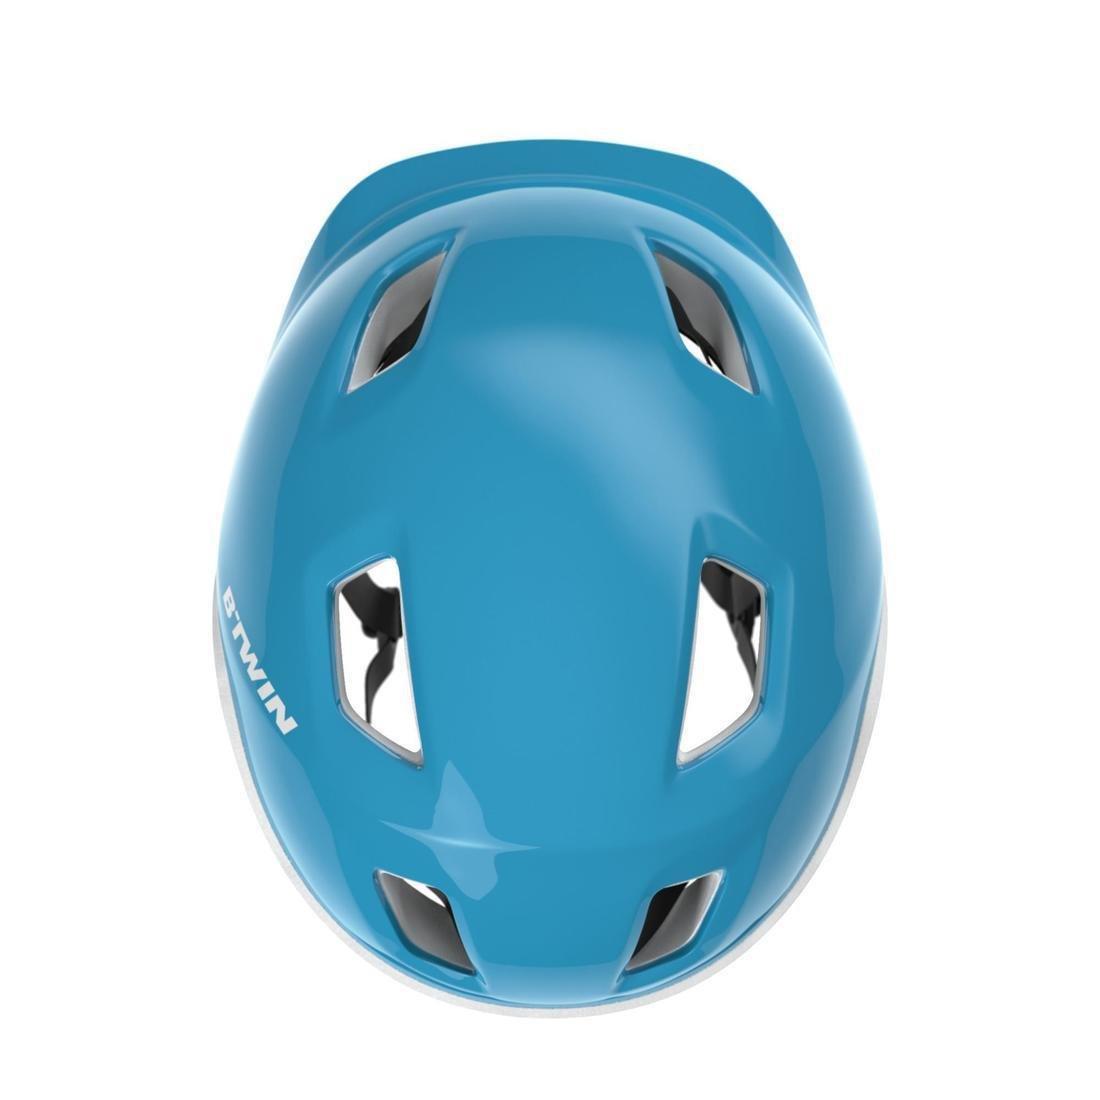 BTWIN - 100 Kids' Cycling Helmet